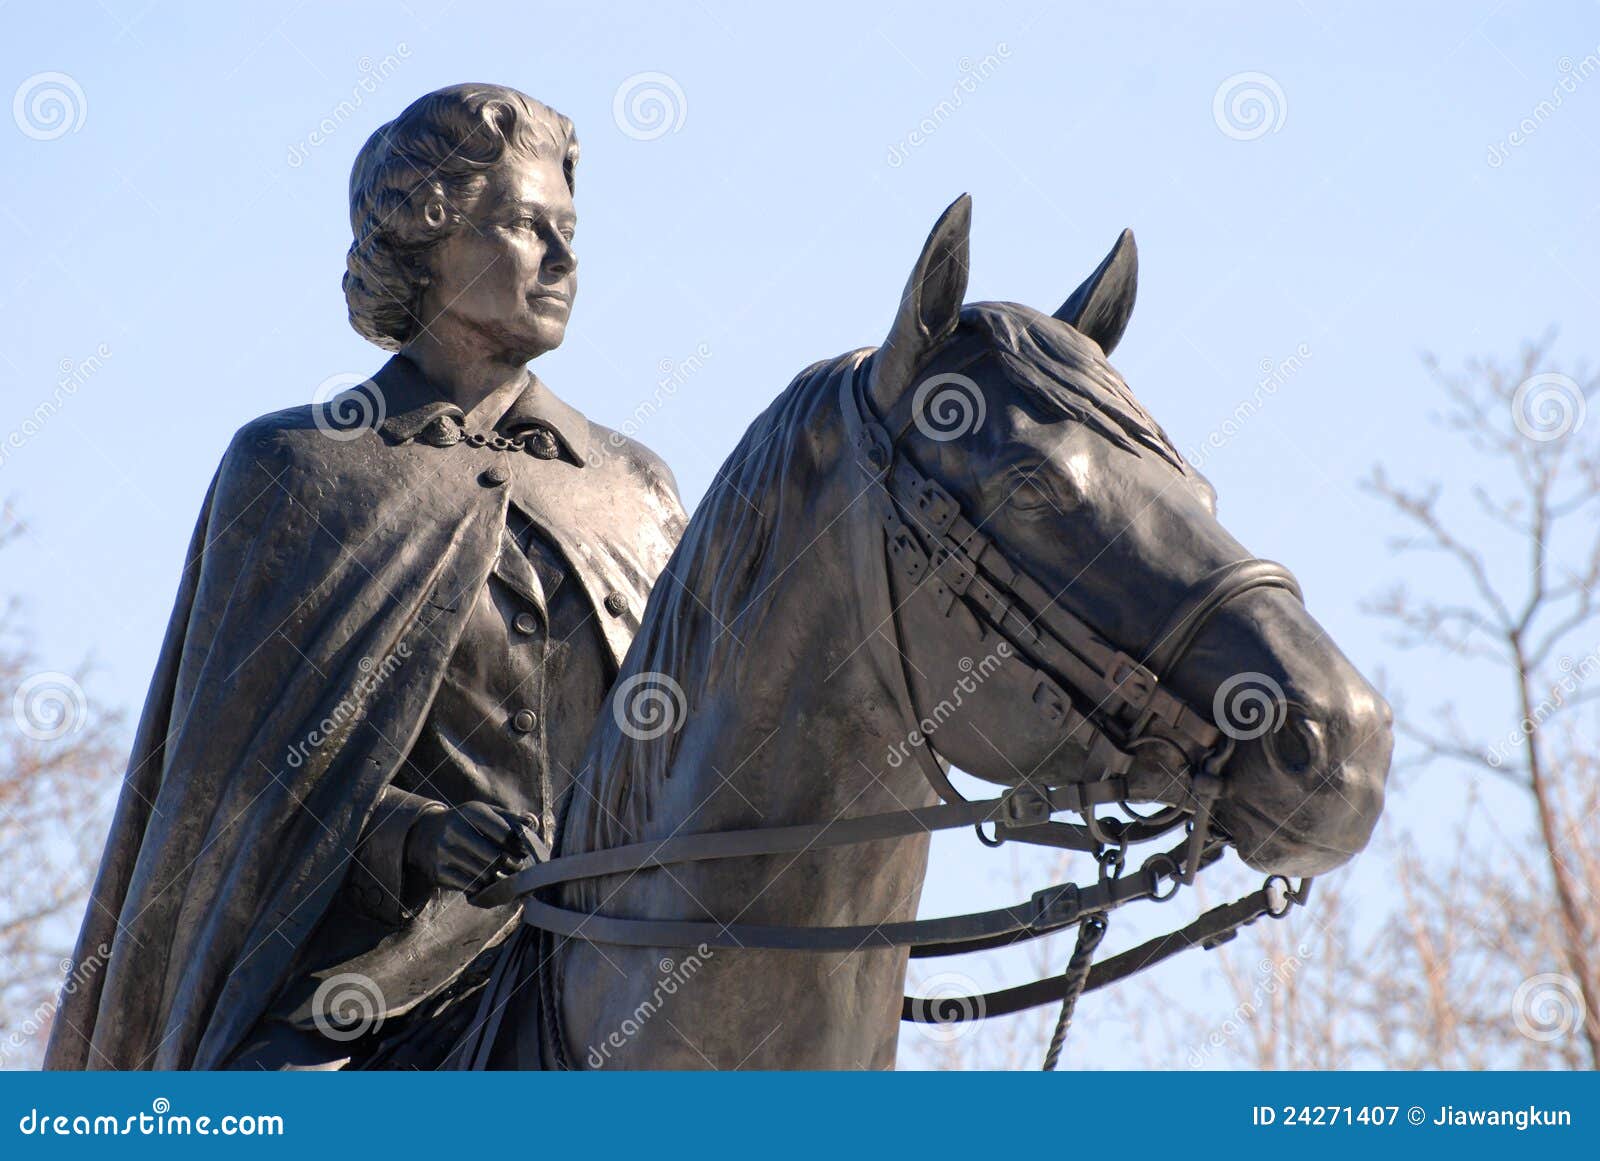 Queen Elizabeth II Statue, Ottawa, Canada Editorial Photography Image